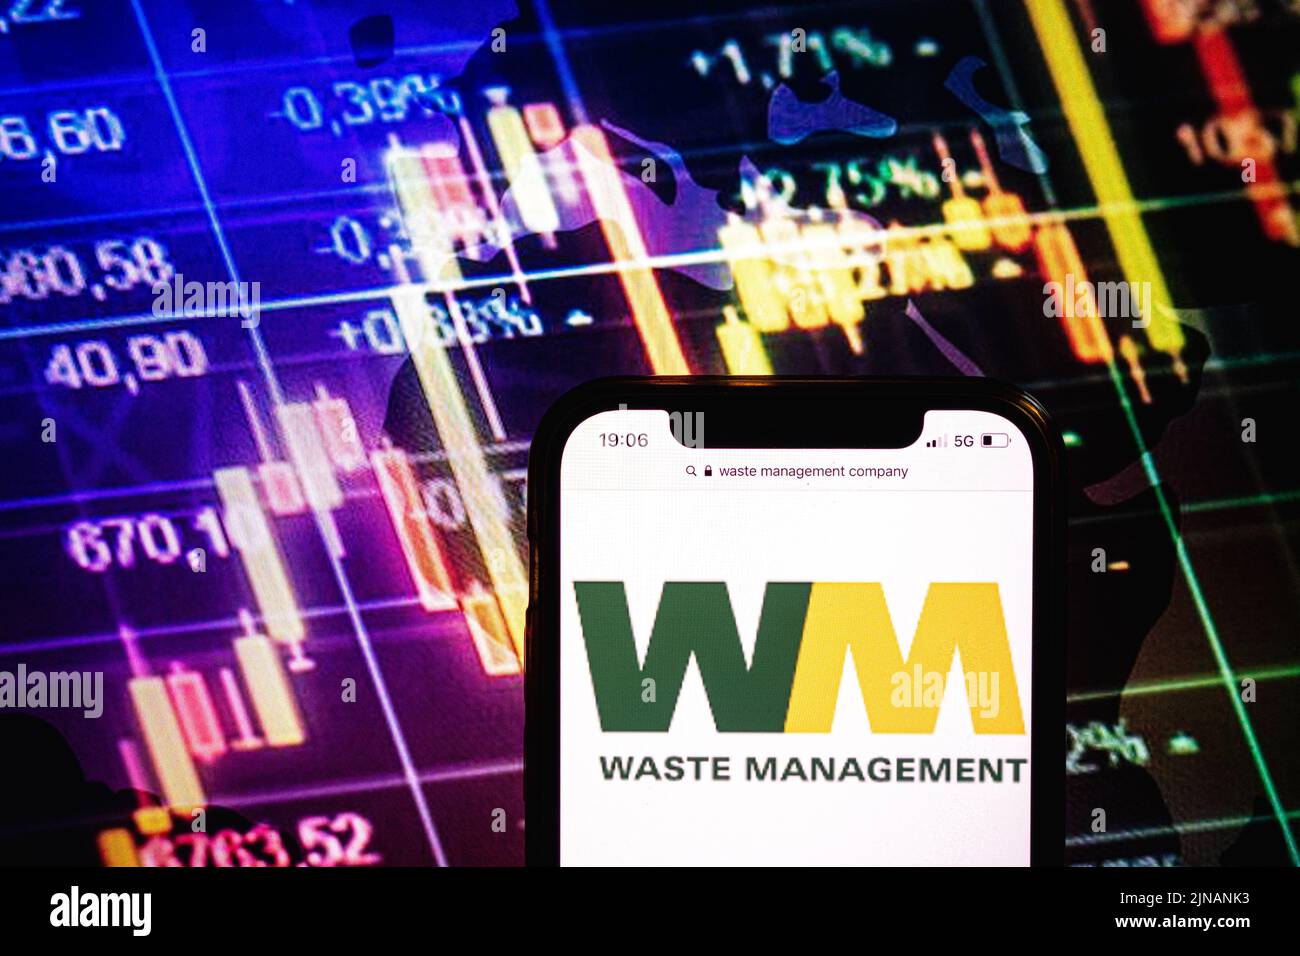 KONSKIE, POLAND - August 09, 2022: Smartphone displaying logo of Waste Management company on stock exchange diagram background Stock Photo